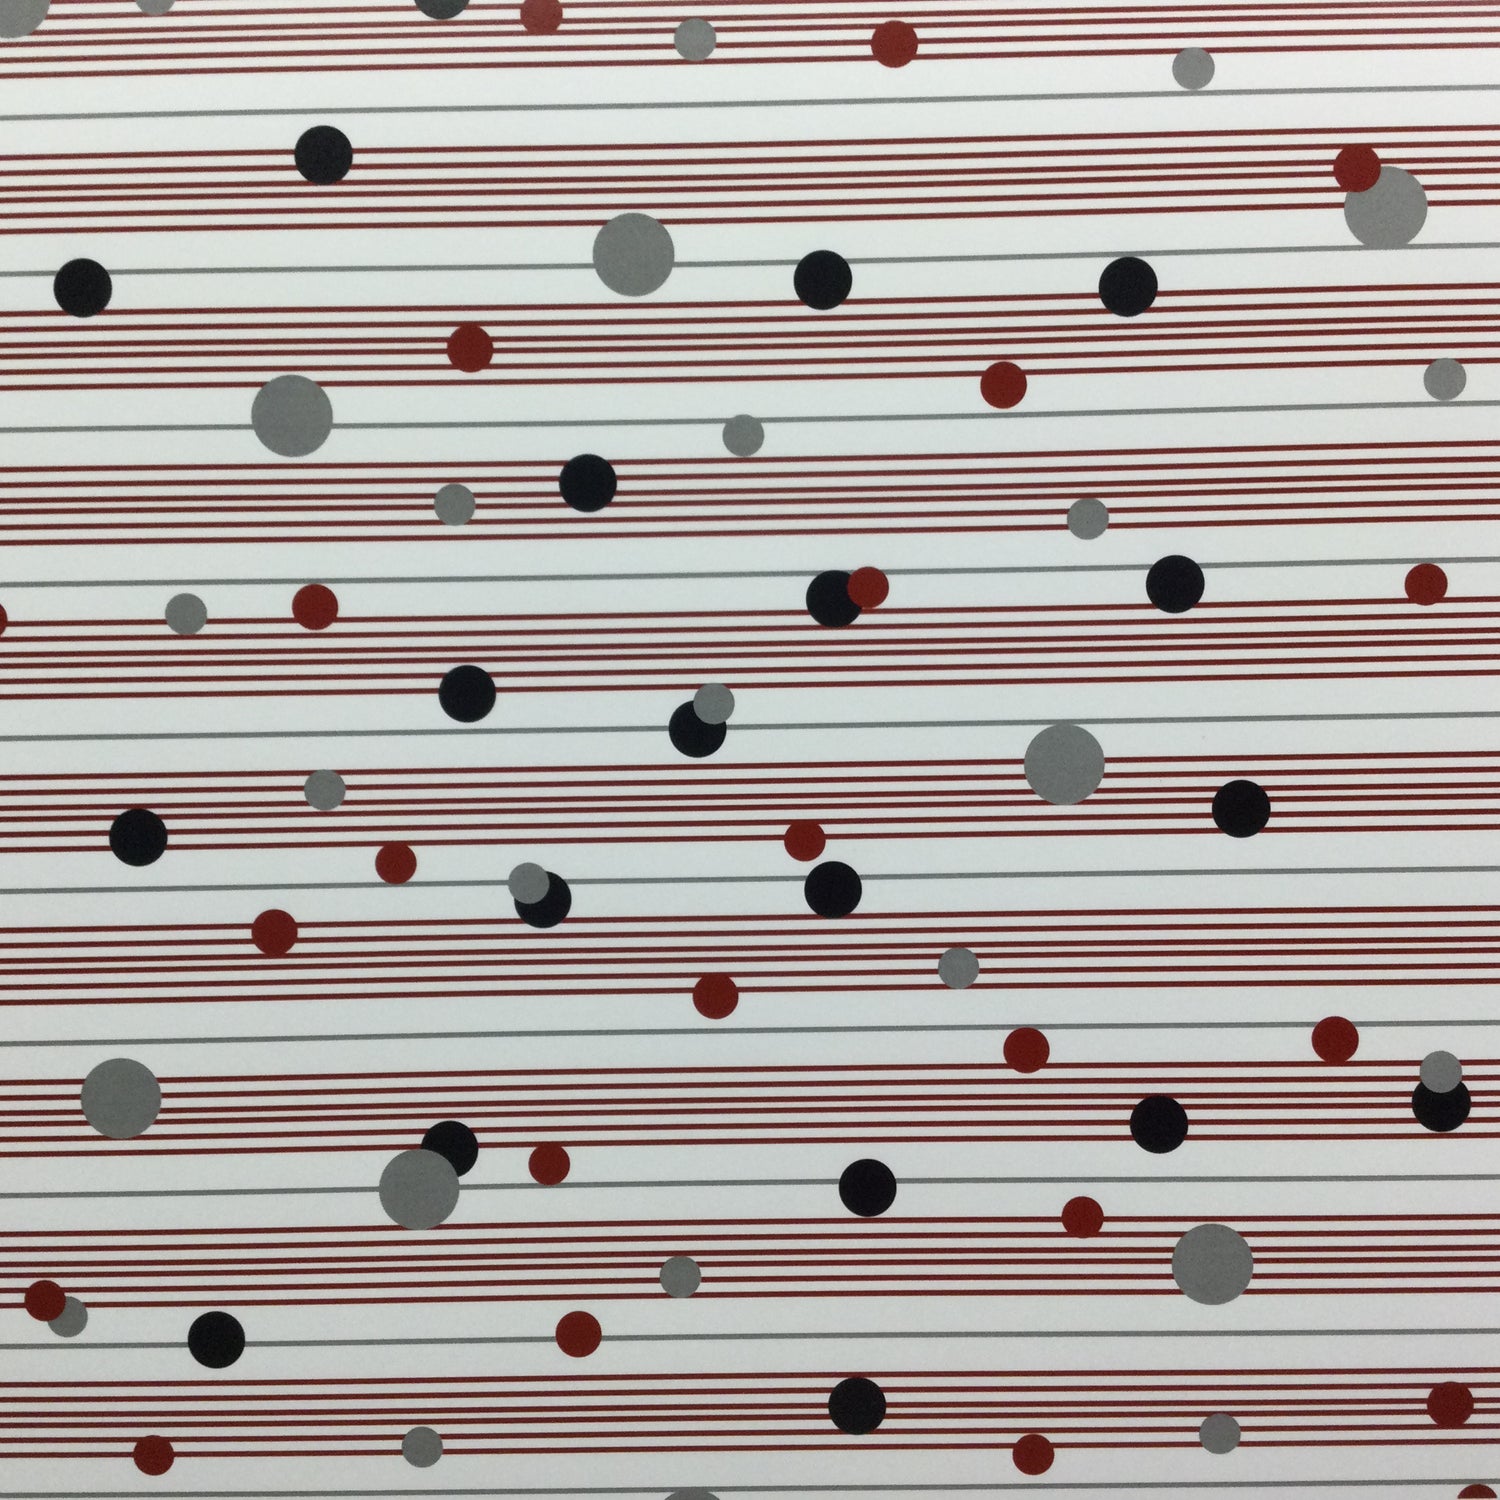 Random Dot &amp; Stripes RED BLACK GREY 12X12 Scrapbook Paper